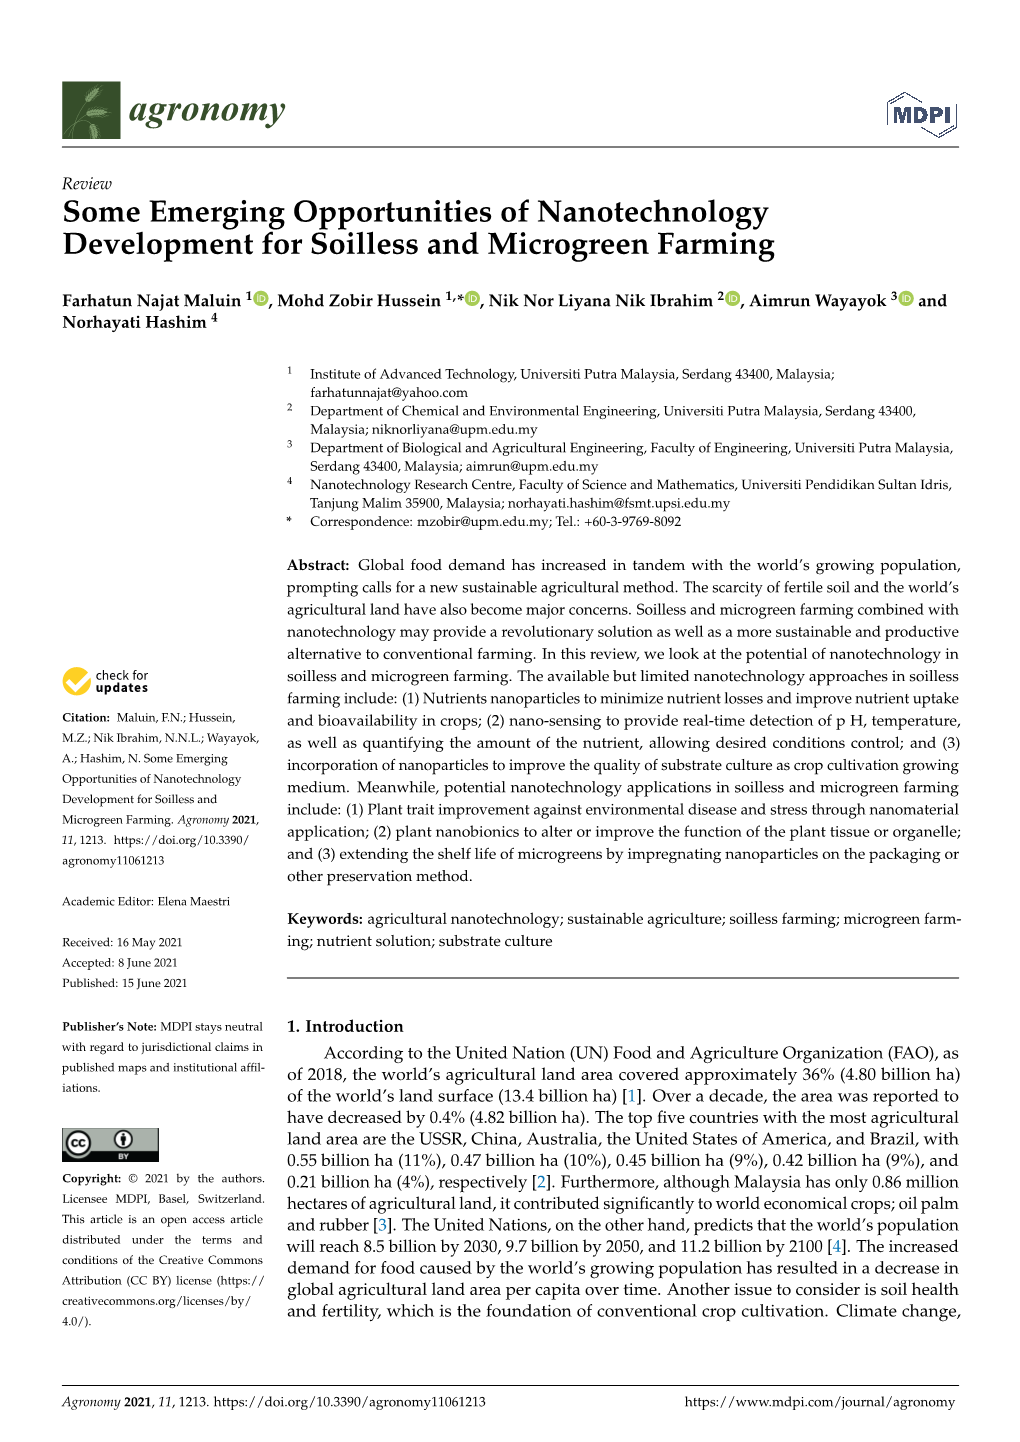 Some Emerging Opportunities of Nanotechnology Development for Soilless and Microgreen Farming